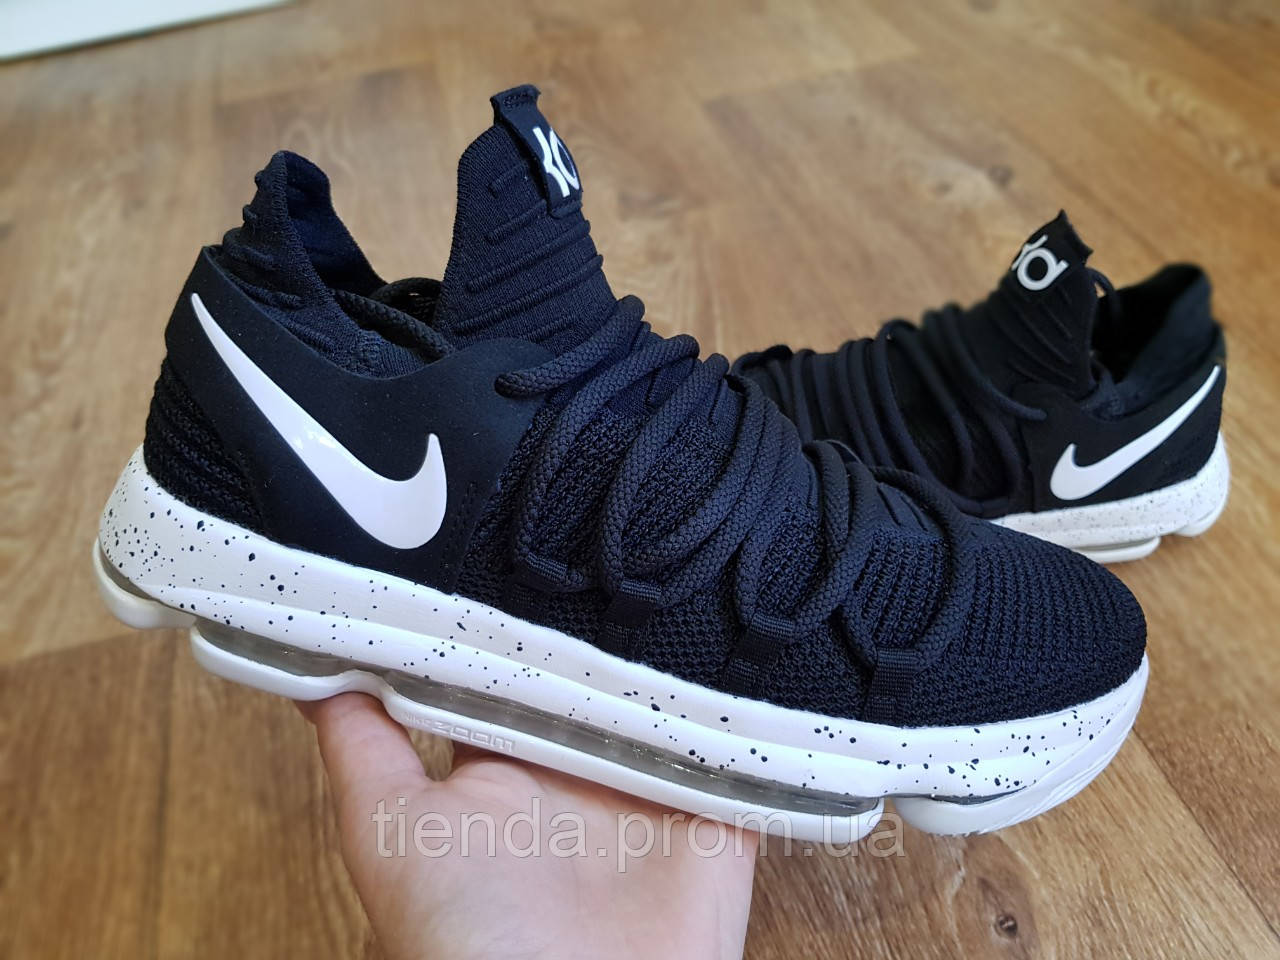 Nike Kevin Durant 10 Black 